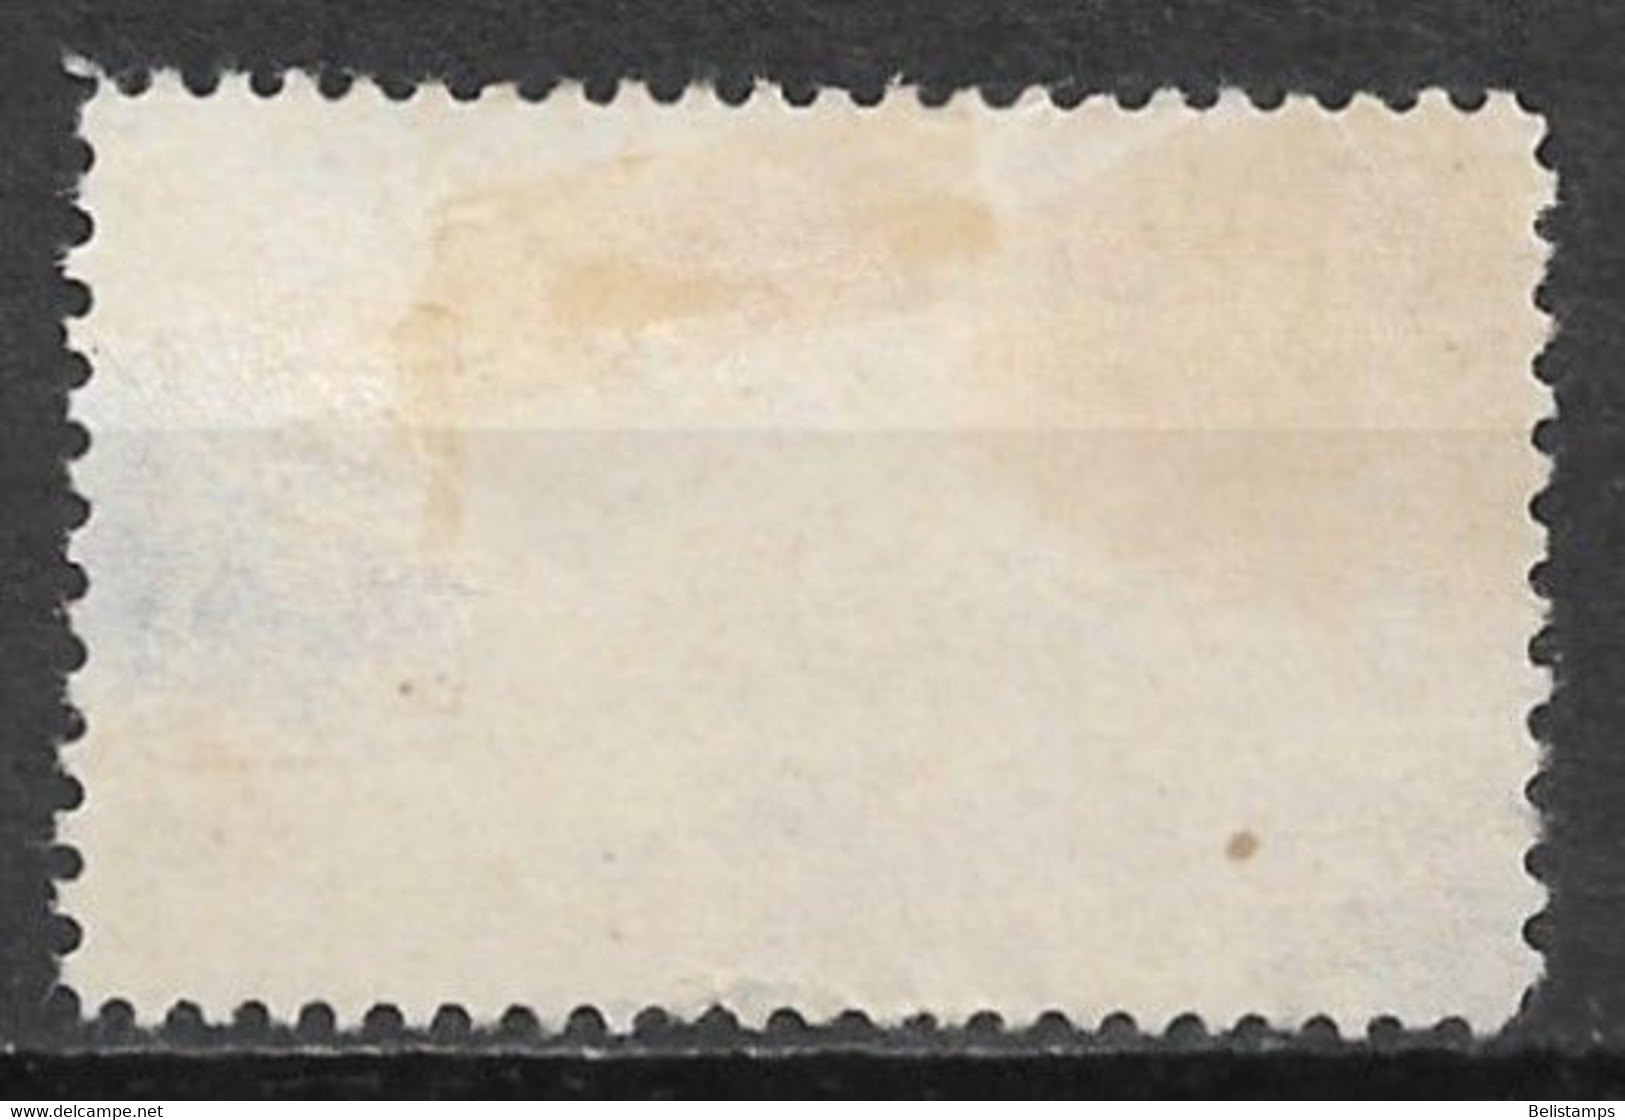 United States 1957. Scott #E21 (U) Special Delivery Letter, Hand To Hand  *Complete Issue* - Express & Einschreiben